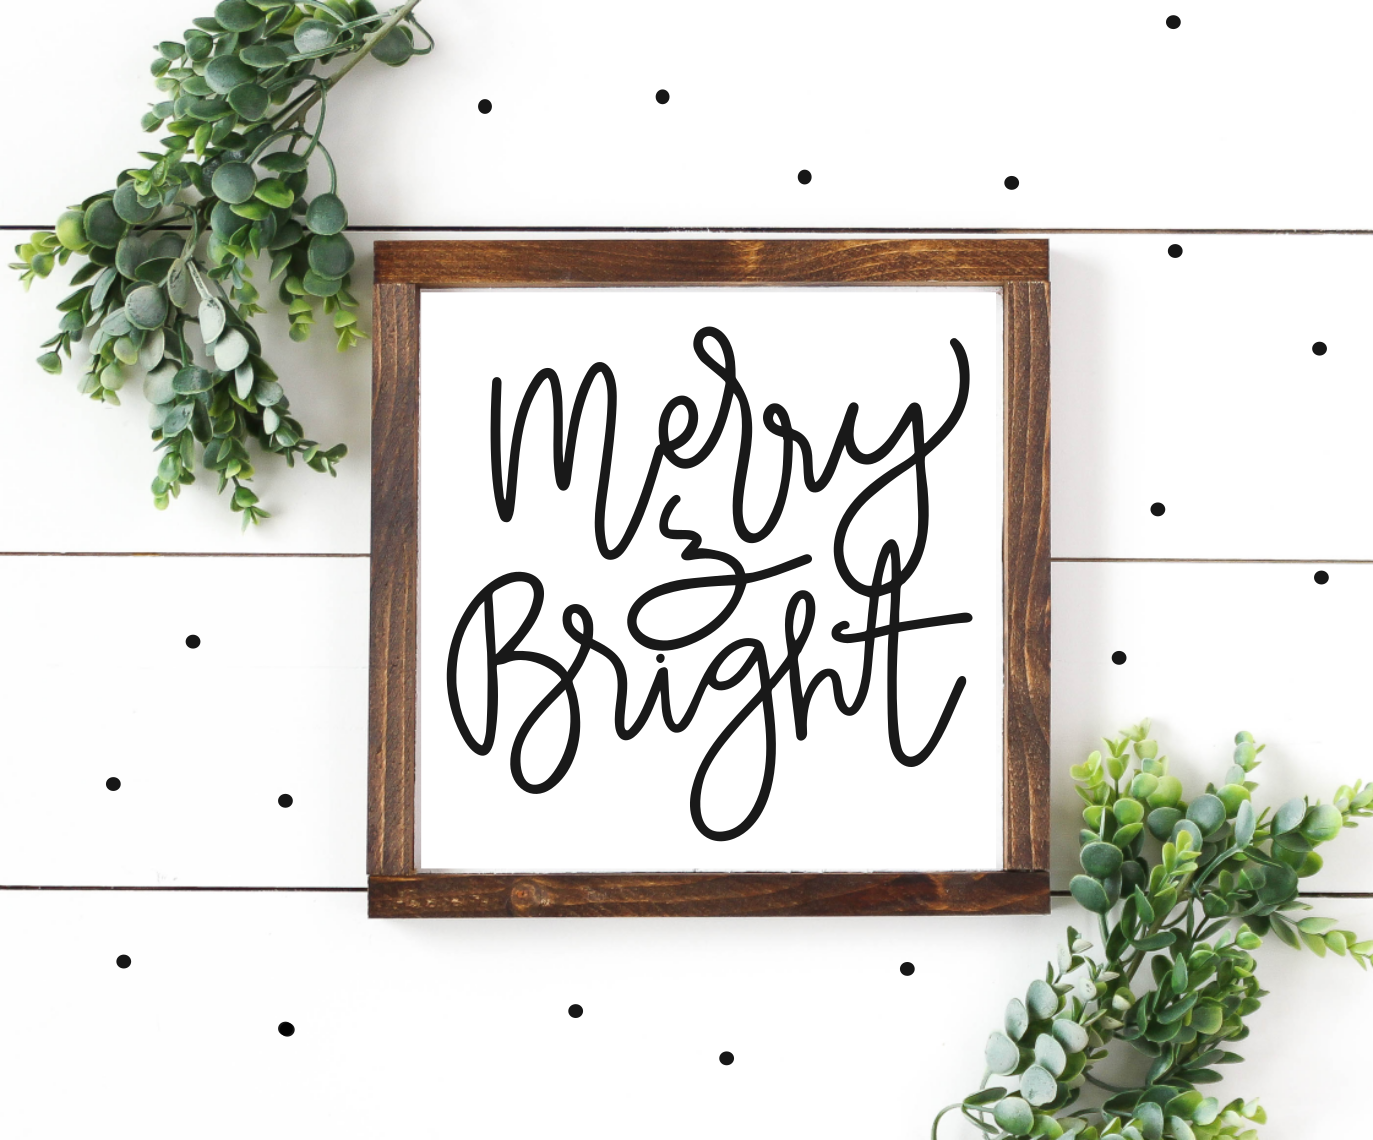 Merry & Bright 4